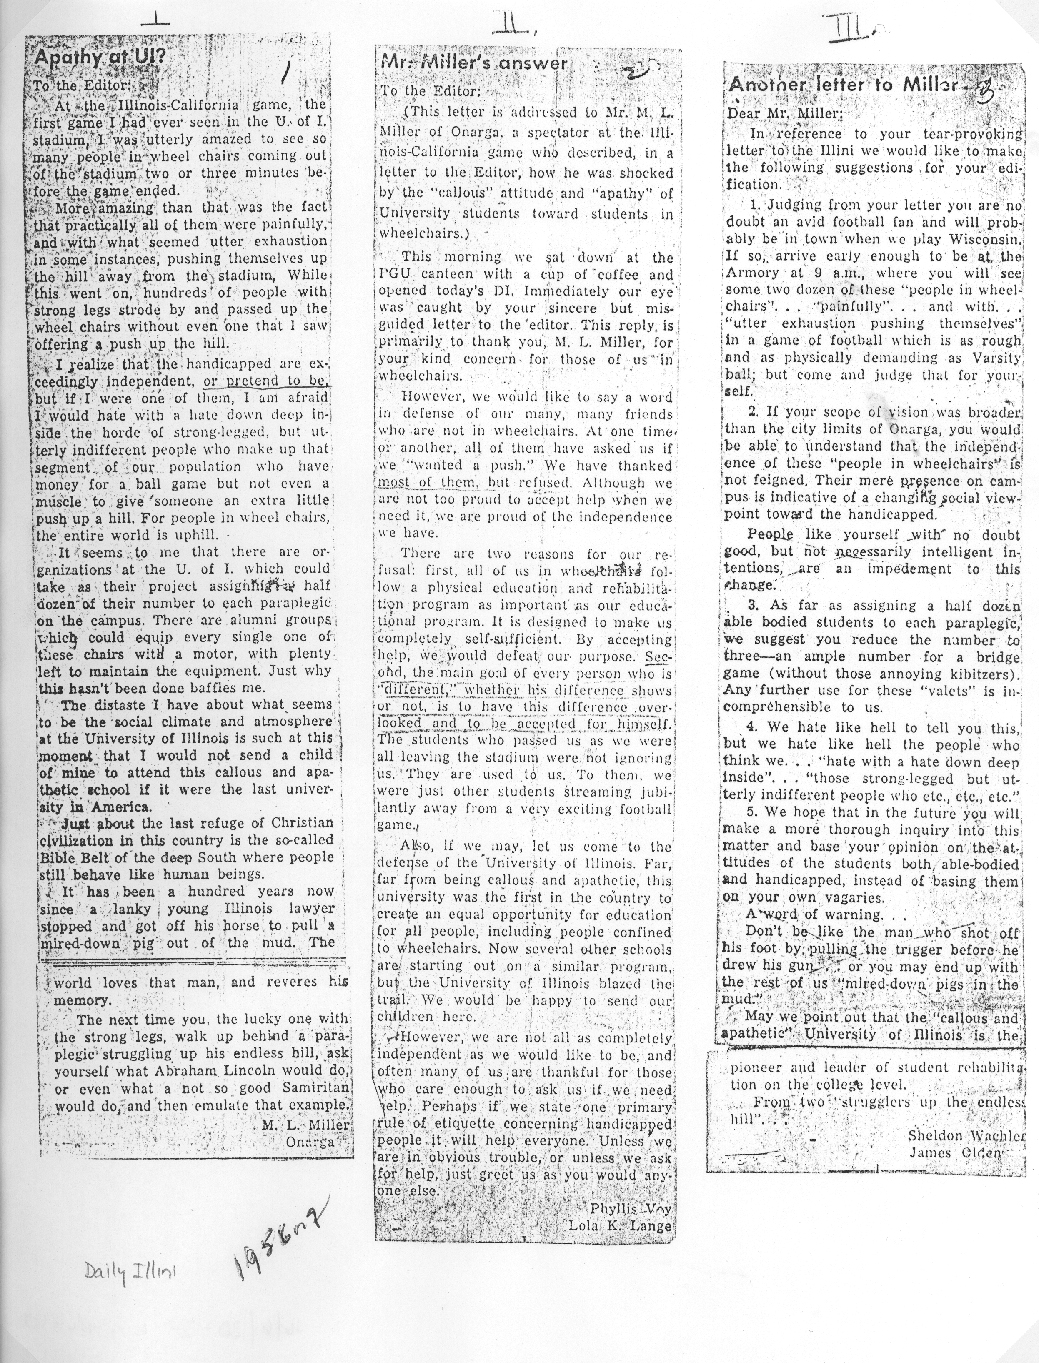 Daily Illini letters, 1956